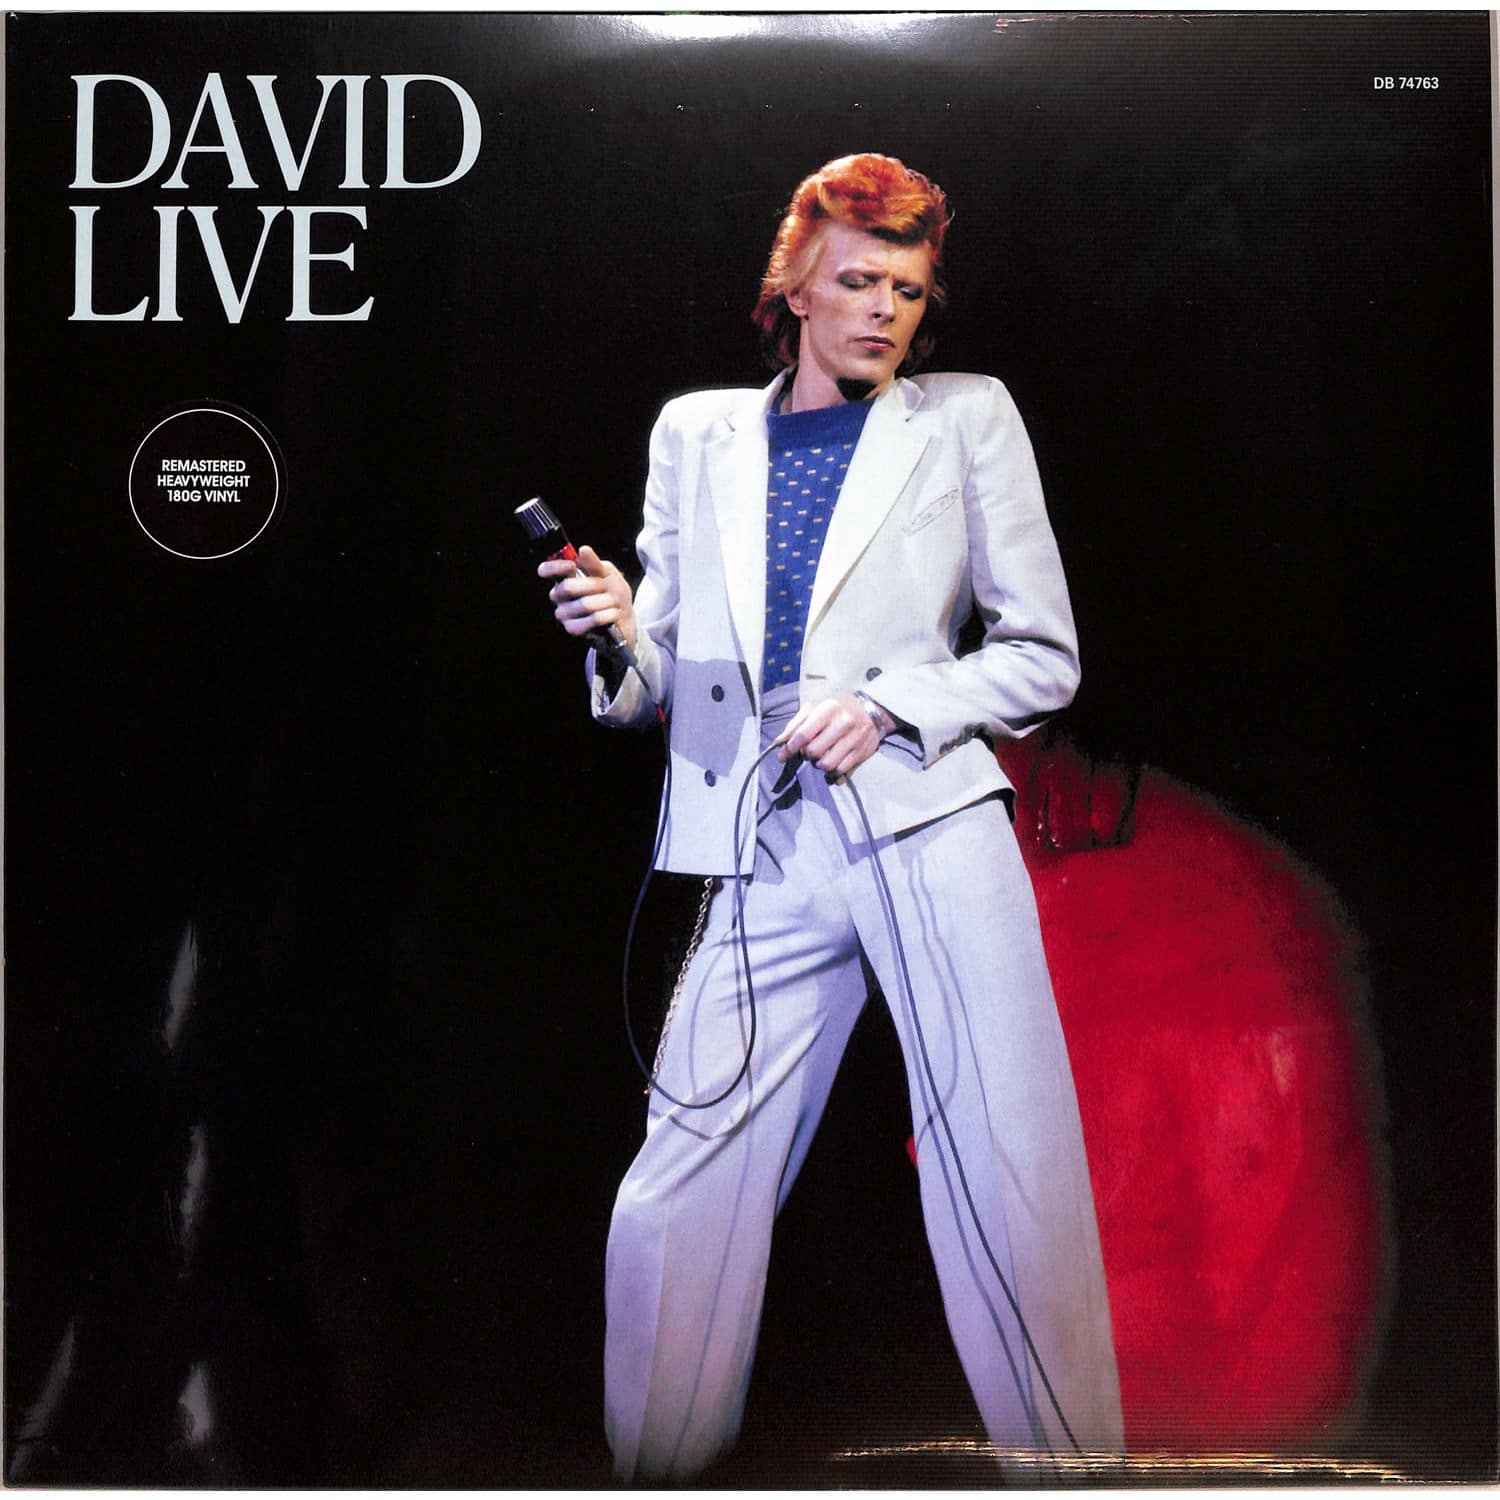 David Bowie - DAVID LIVE 